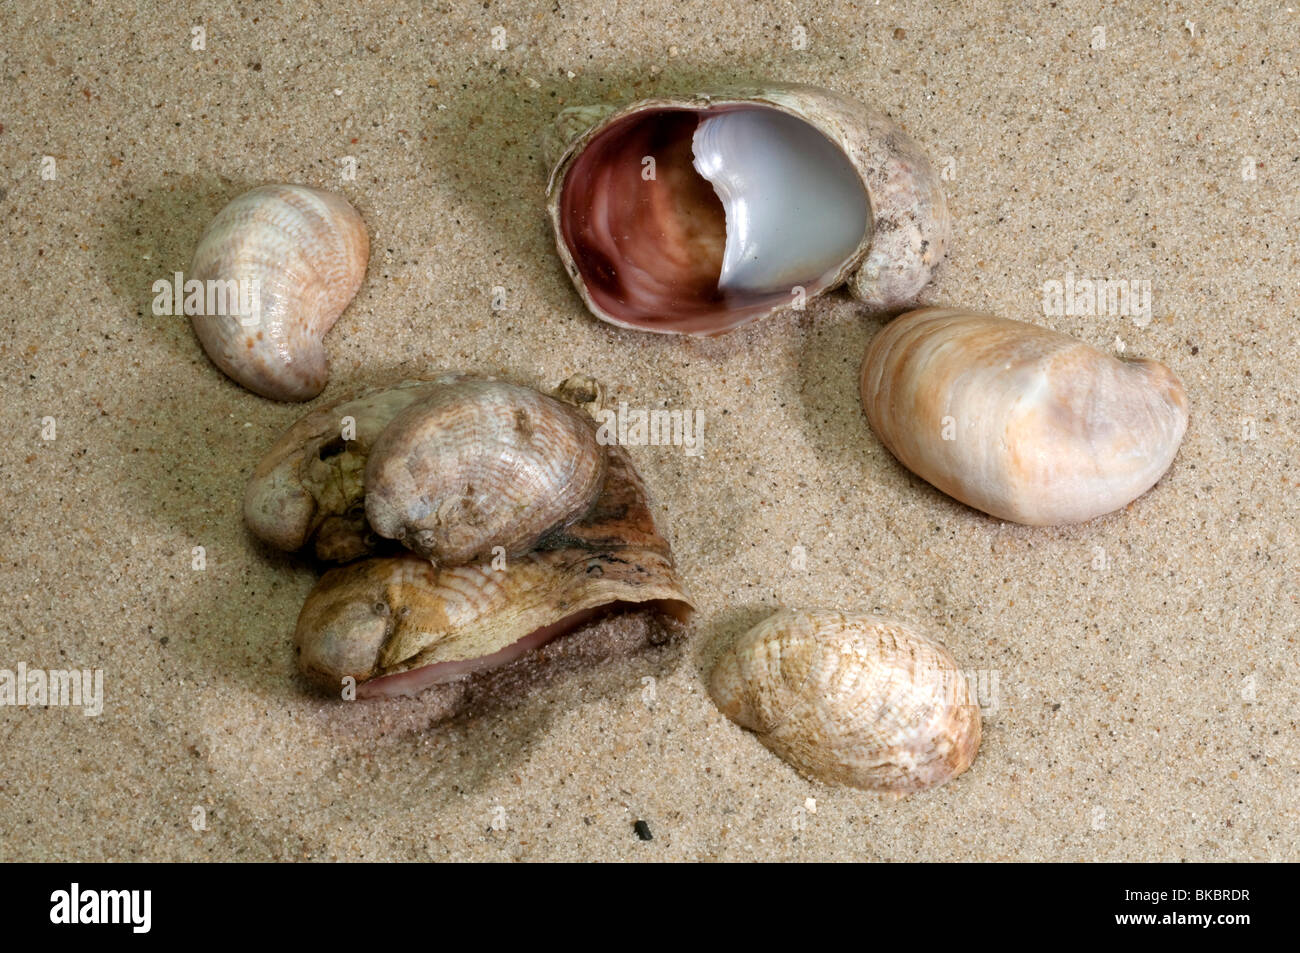 American Slipper Limpet, Common Atlantic Slippersnail (Crepidula fornicata), shells on beach sand. Stock Photo